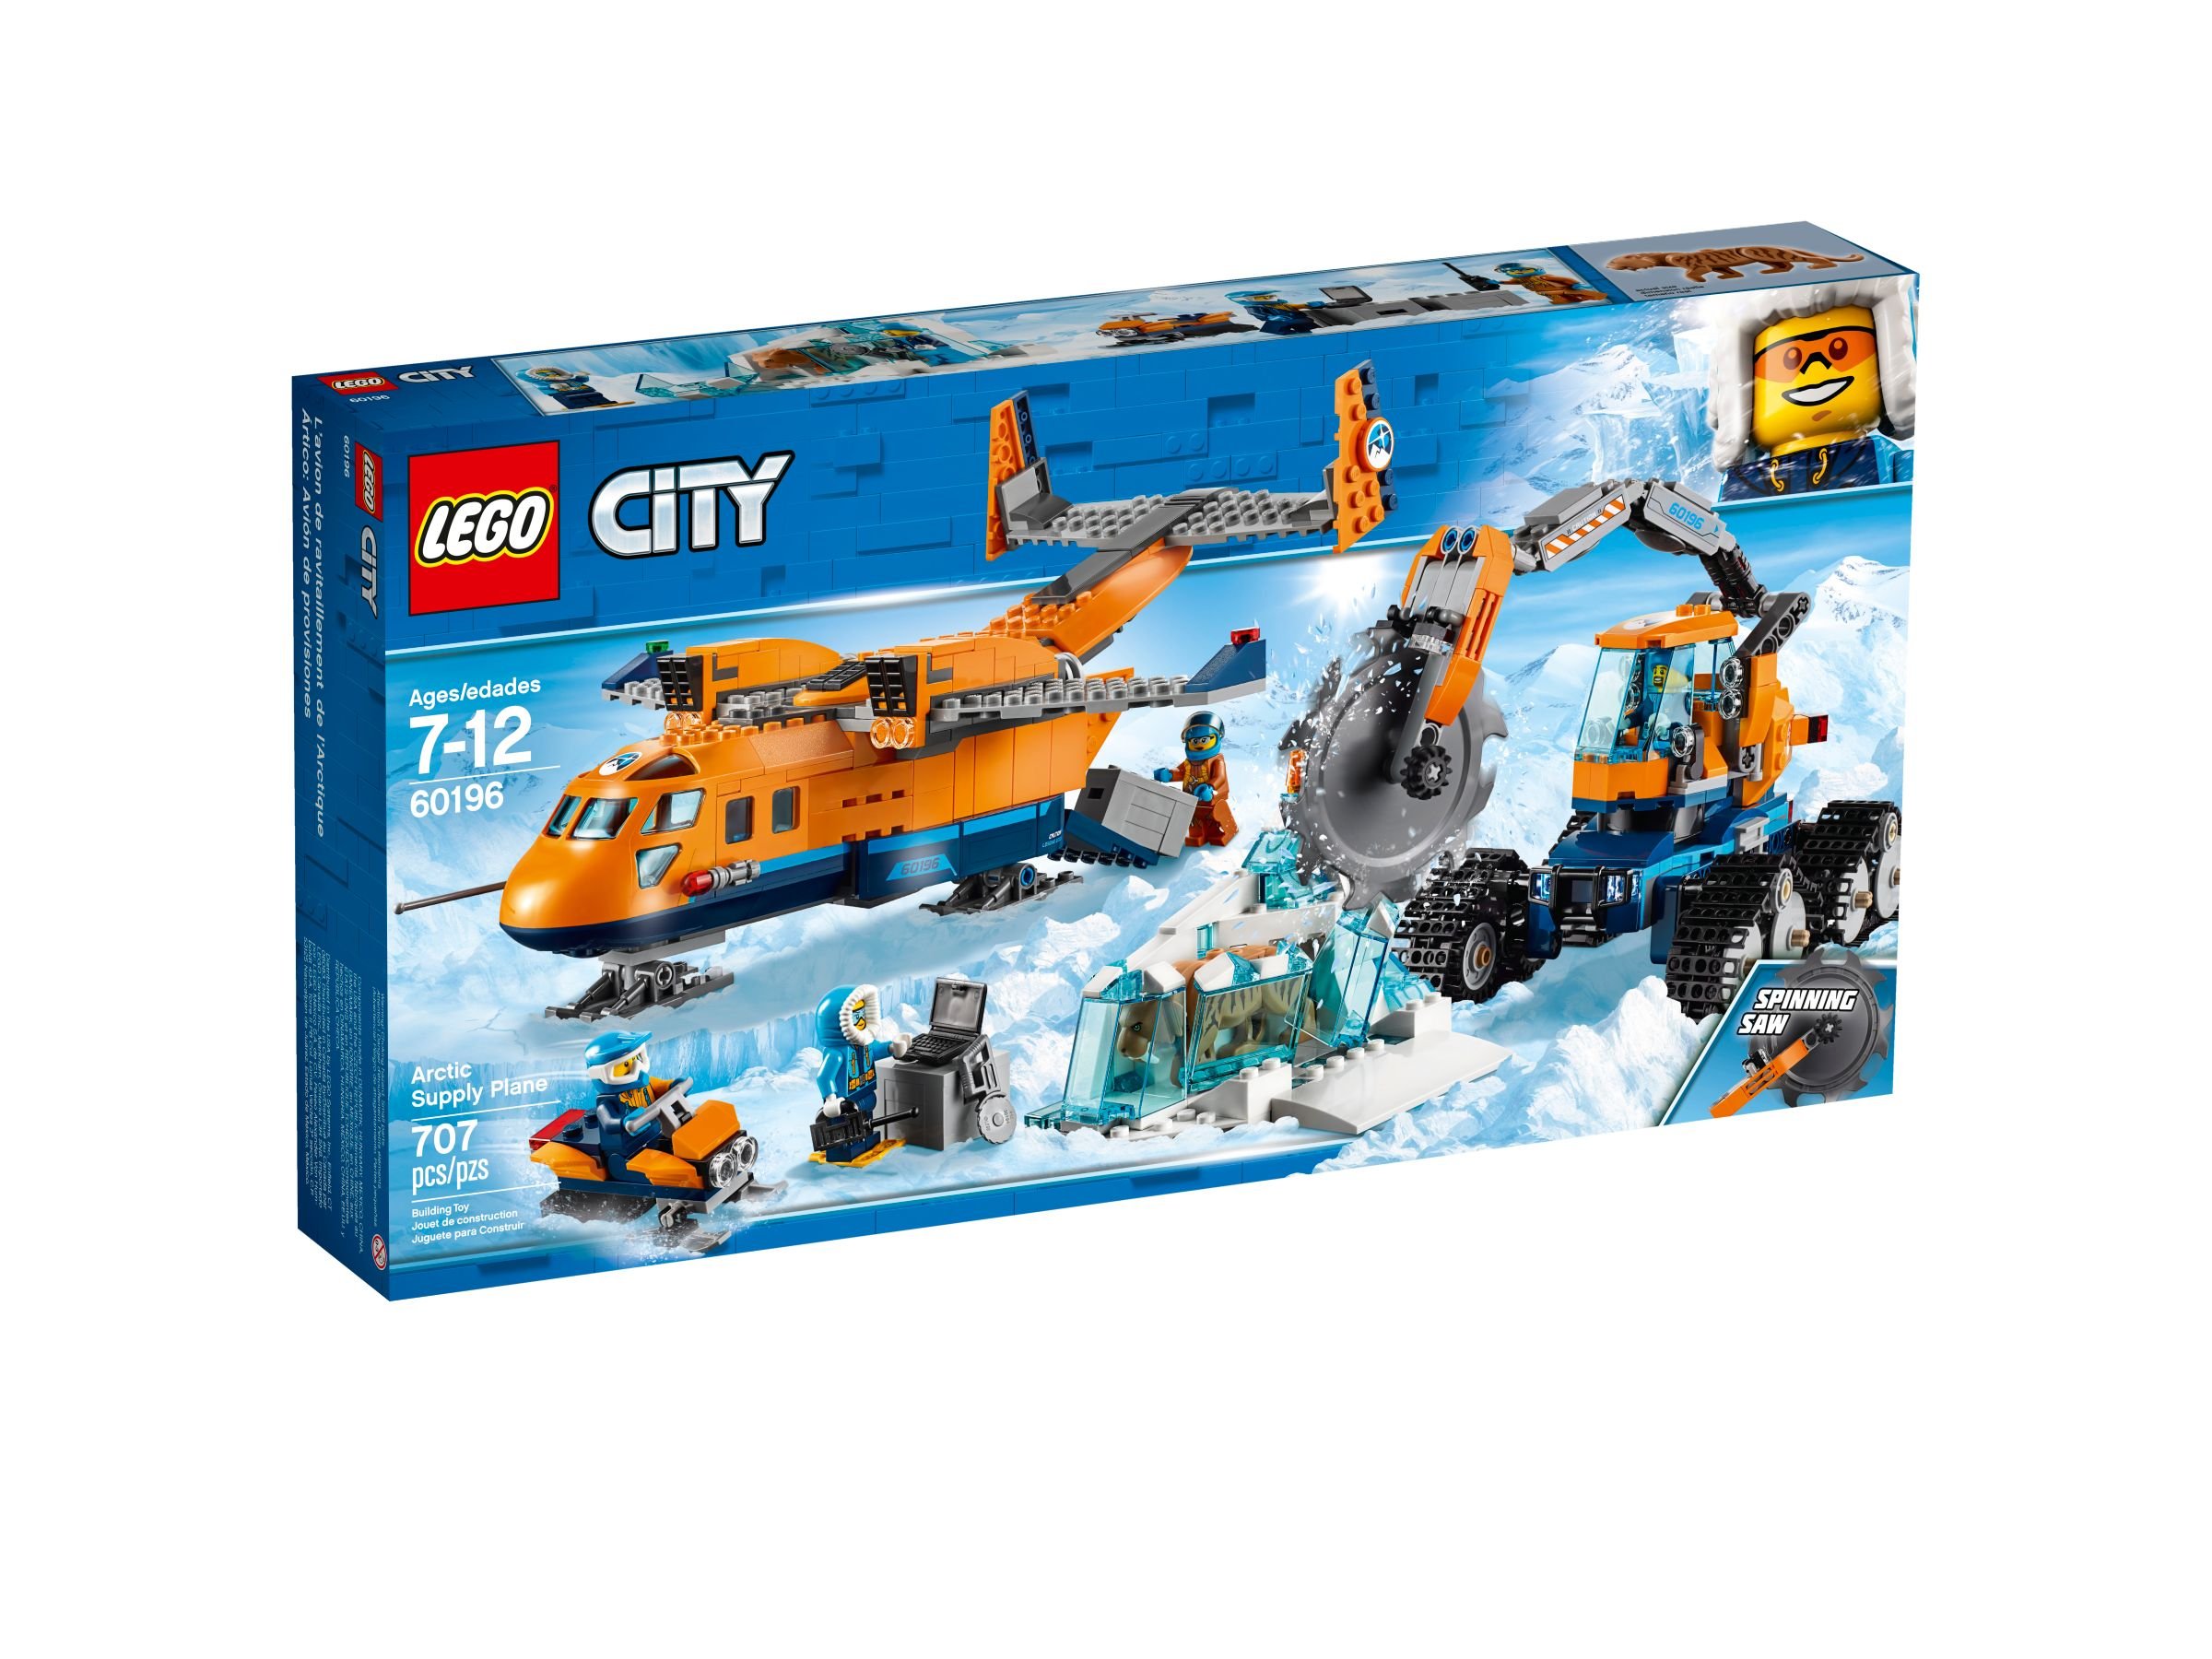 LEGO City 60196 Arktis-Versorgungsflugzeug LEGO_60196_alt1.jpg